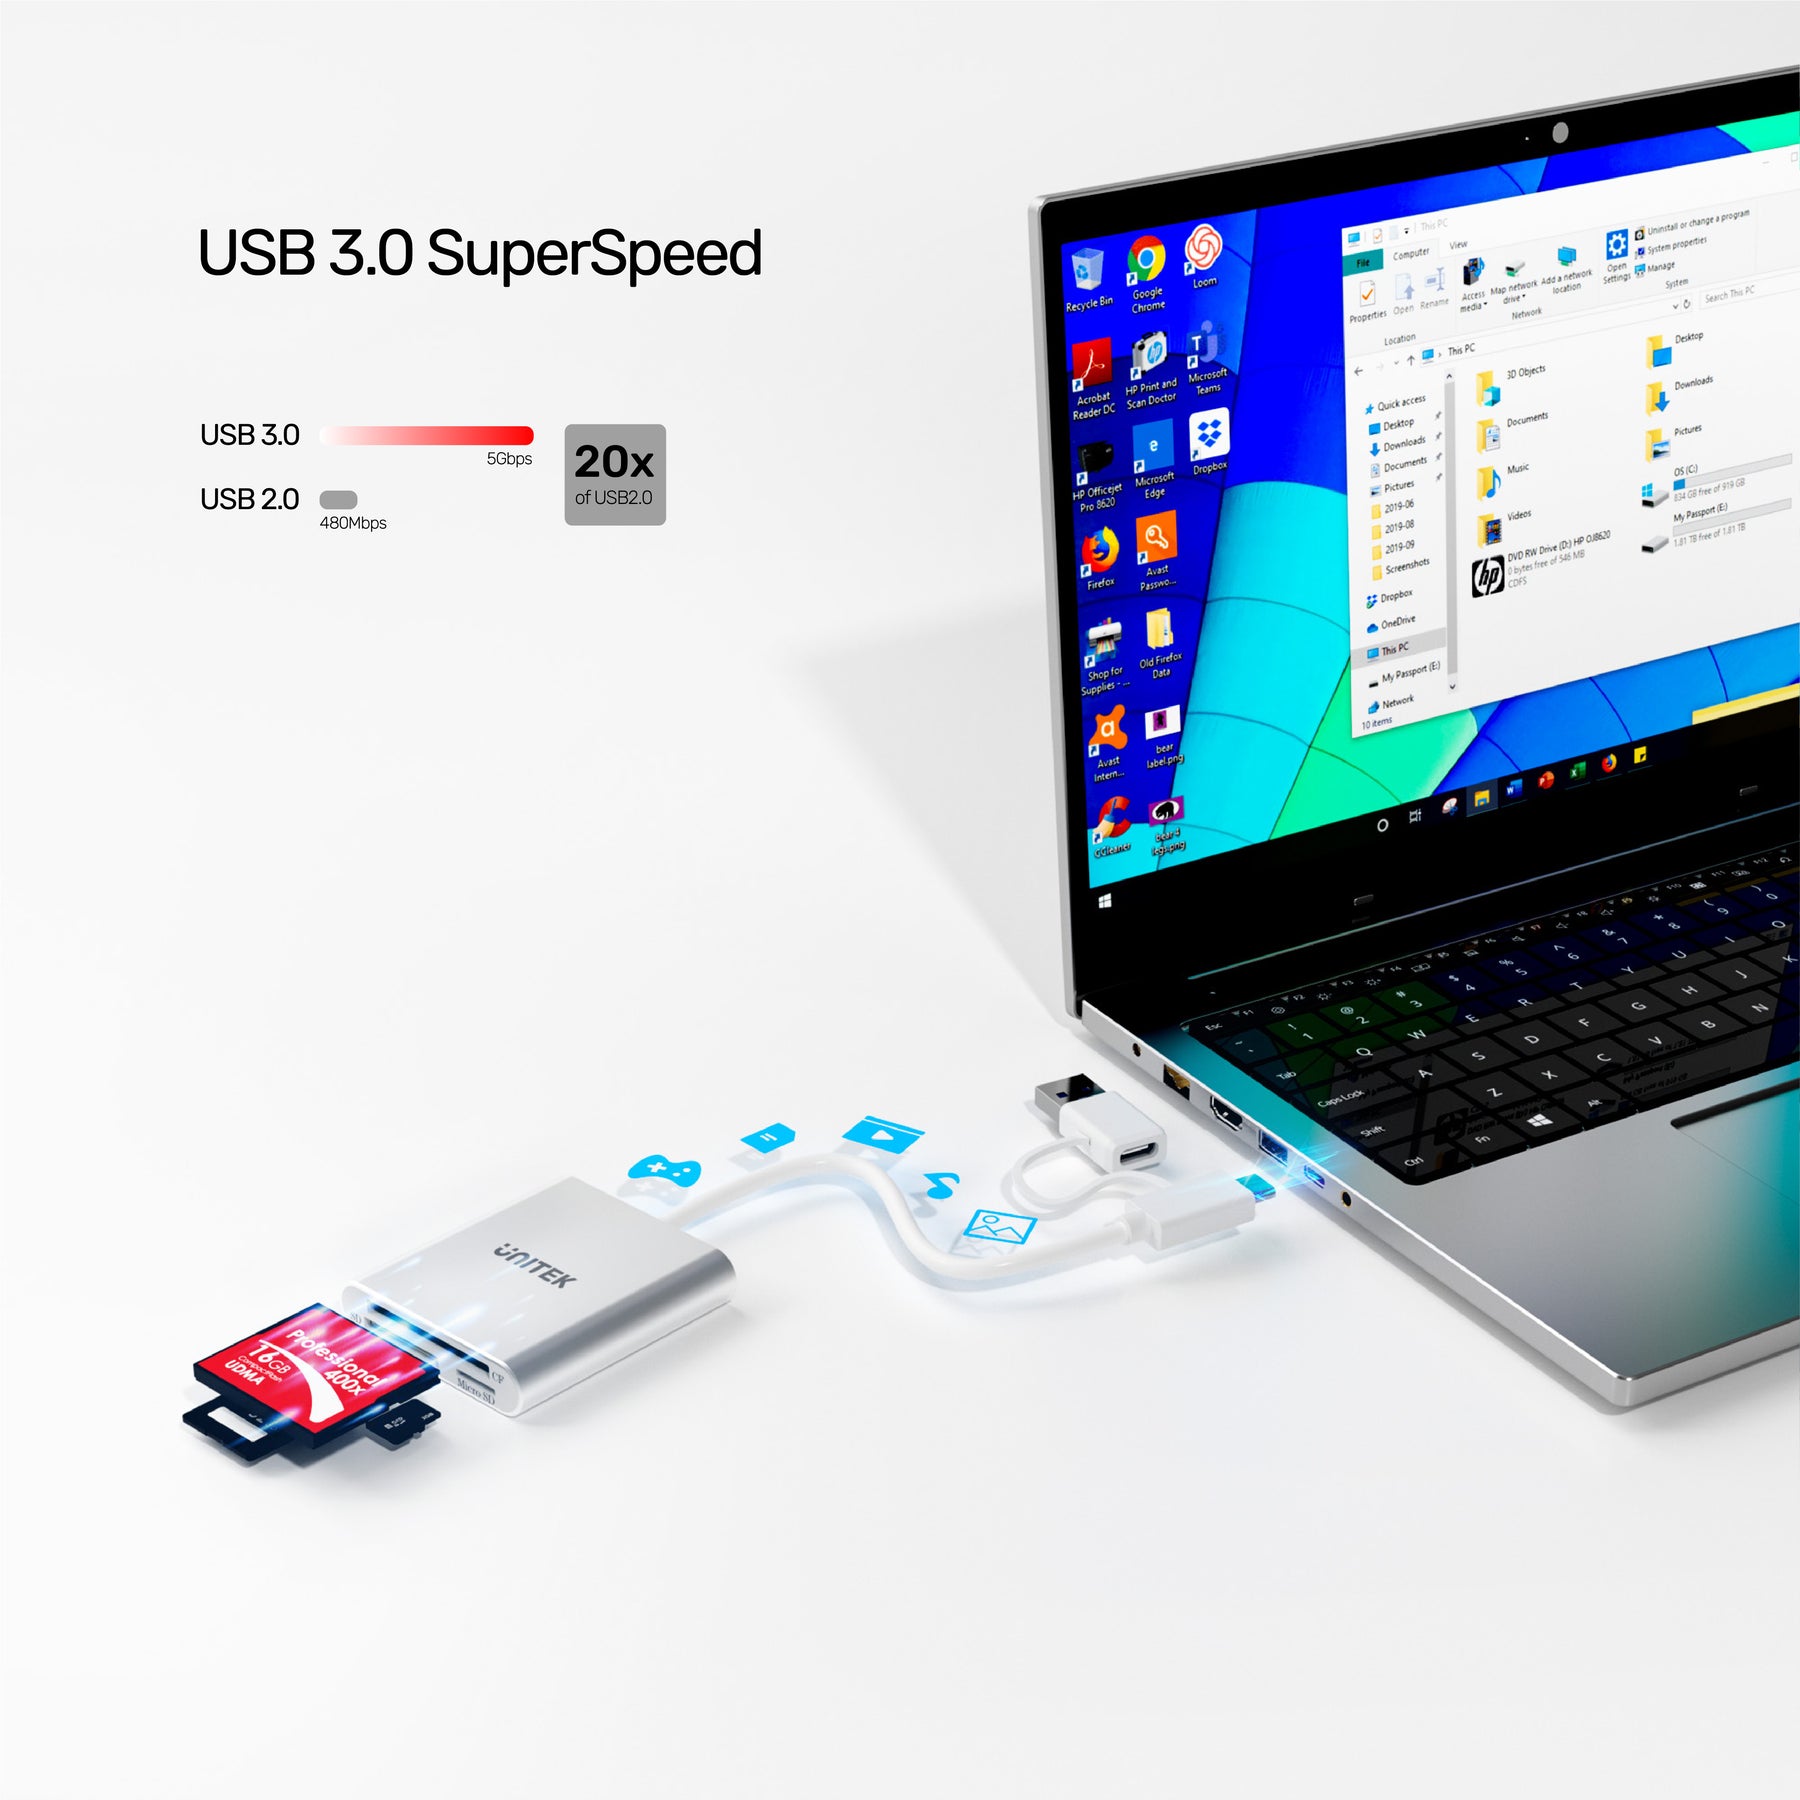 3-Port USB-C Hub, SD Card Reader, USB-A, USB 3.0